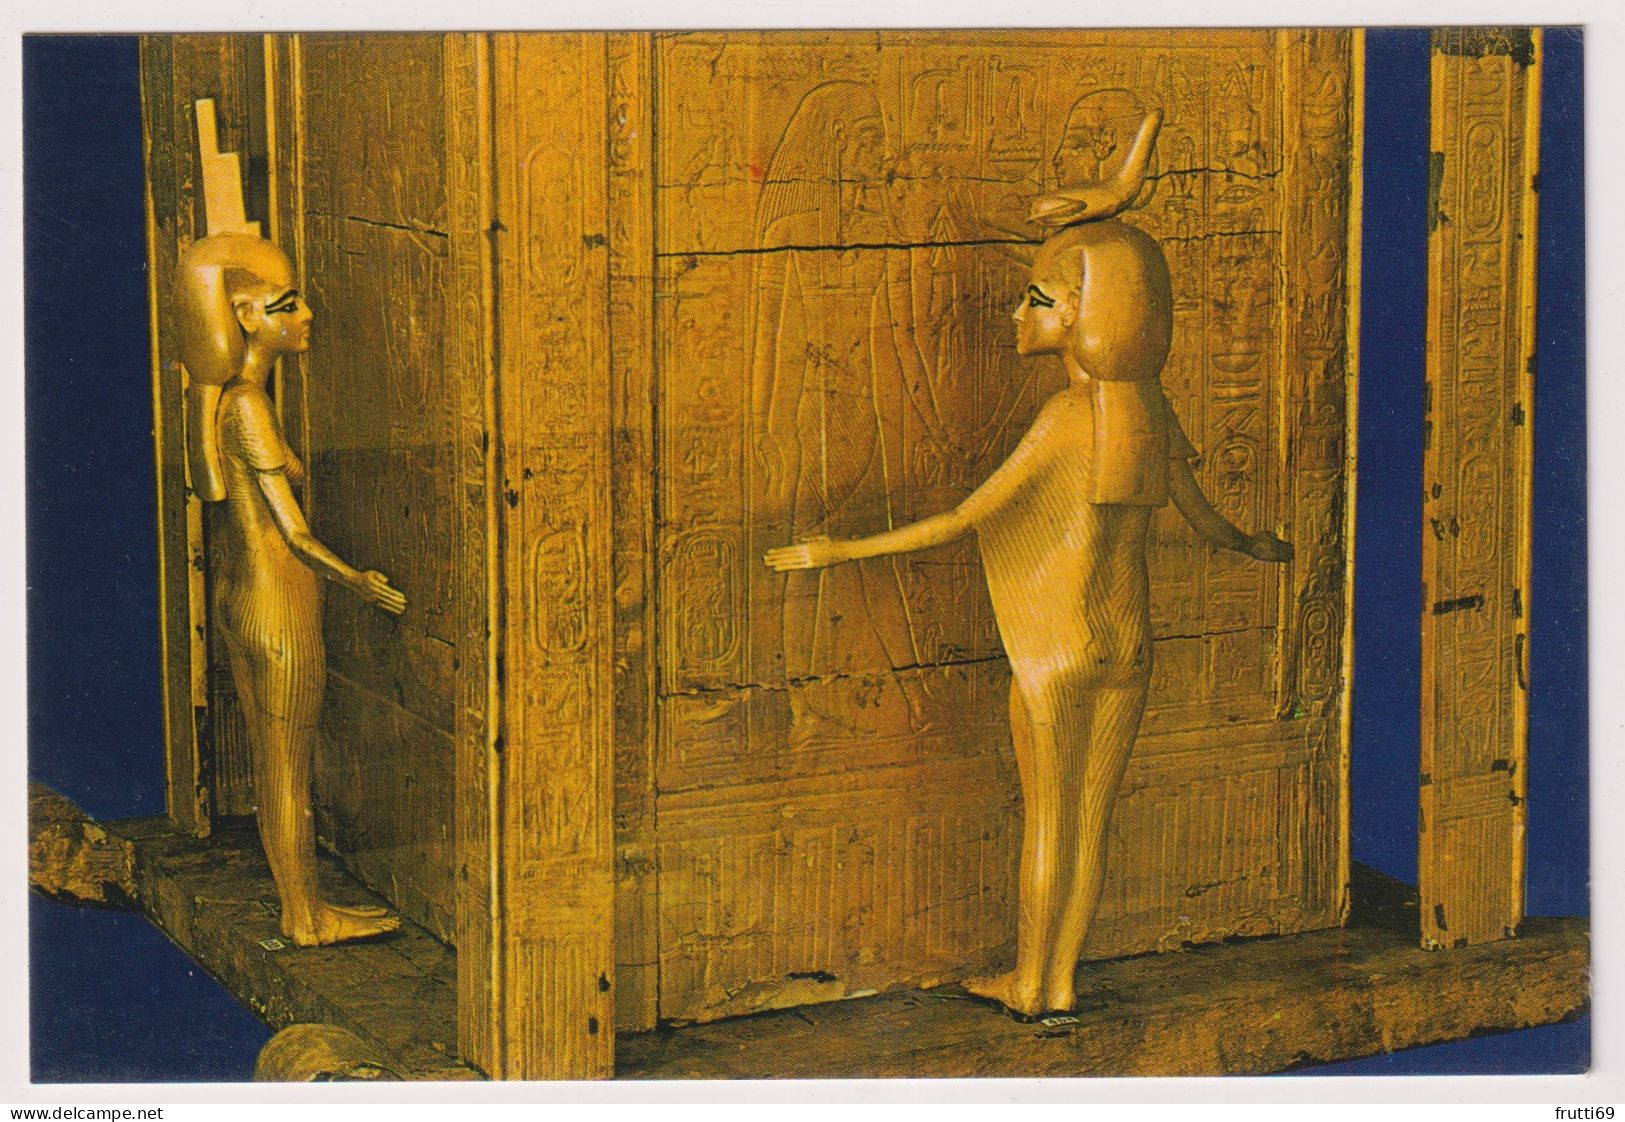 AK 198270 EGYPT -   Cairo - The Egyptian Museum - Tutankhamen's Treasures - Large Gold Canopie Chest - Musea